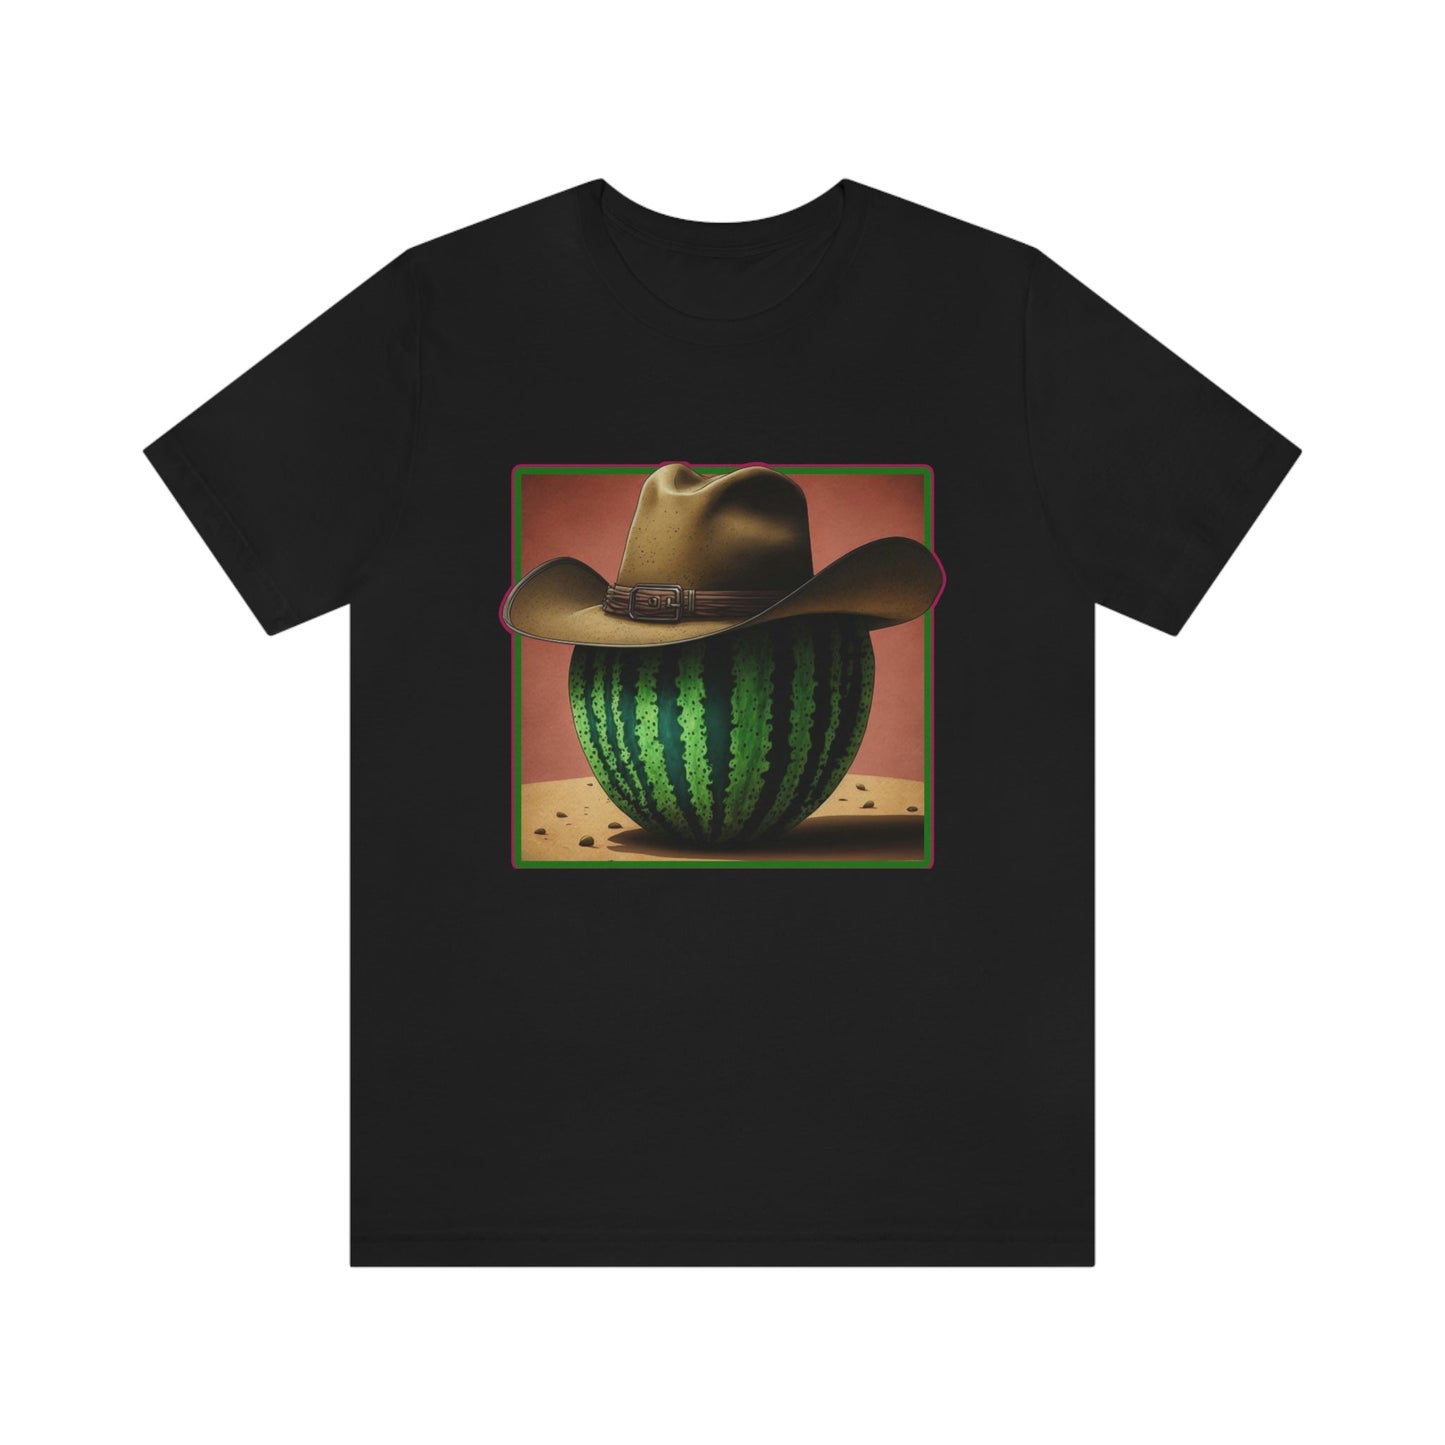 Cowboy Watermelon Tee - The Boss - Bind on Equip - 31118999996961074243